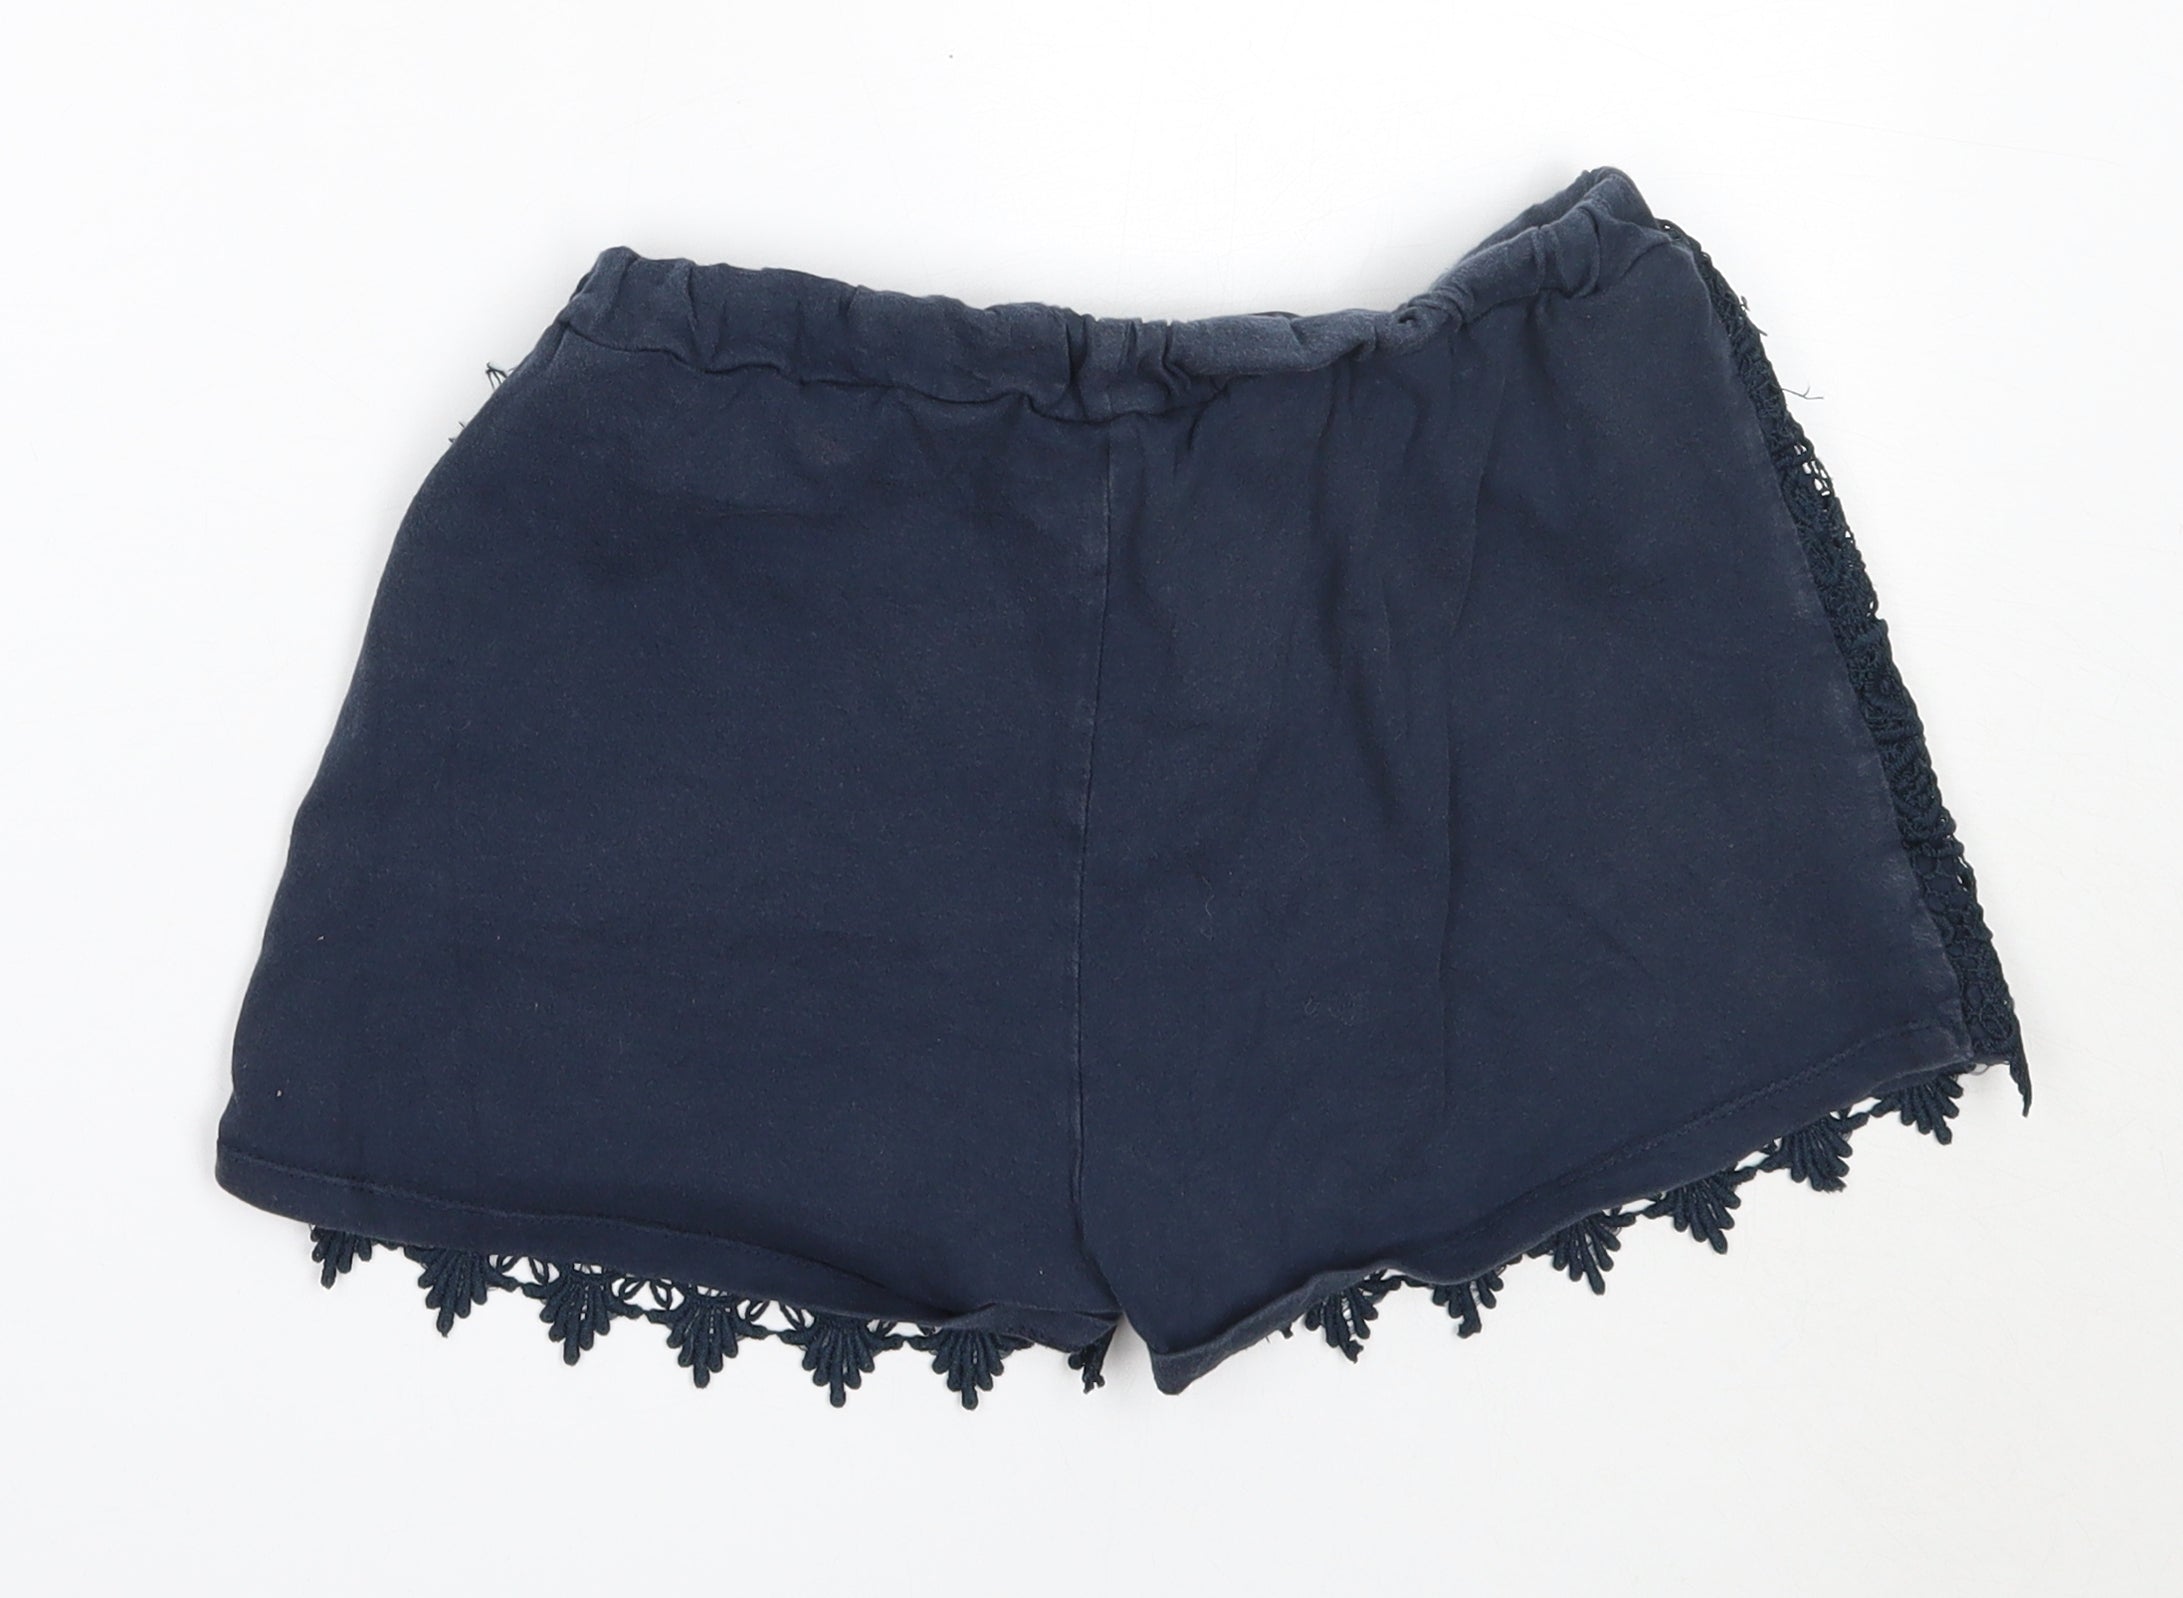 Buy Fraulein Women Hot Pants FNOTS003BlueSmall at Amazonin